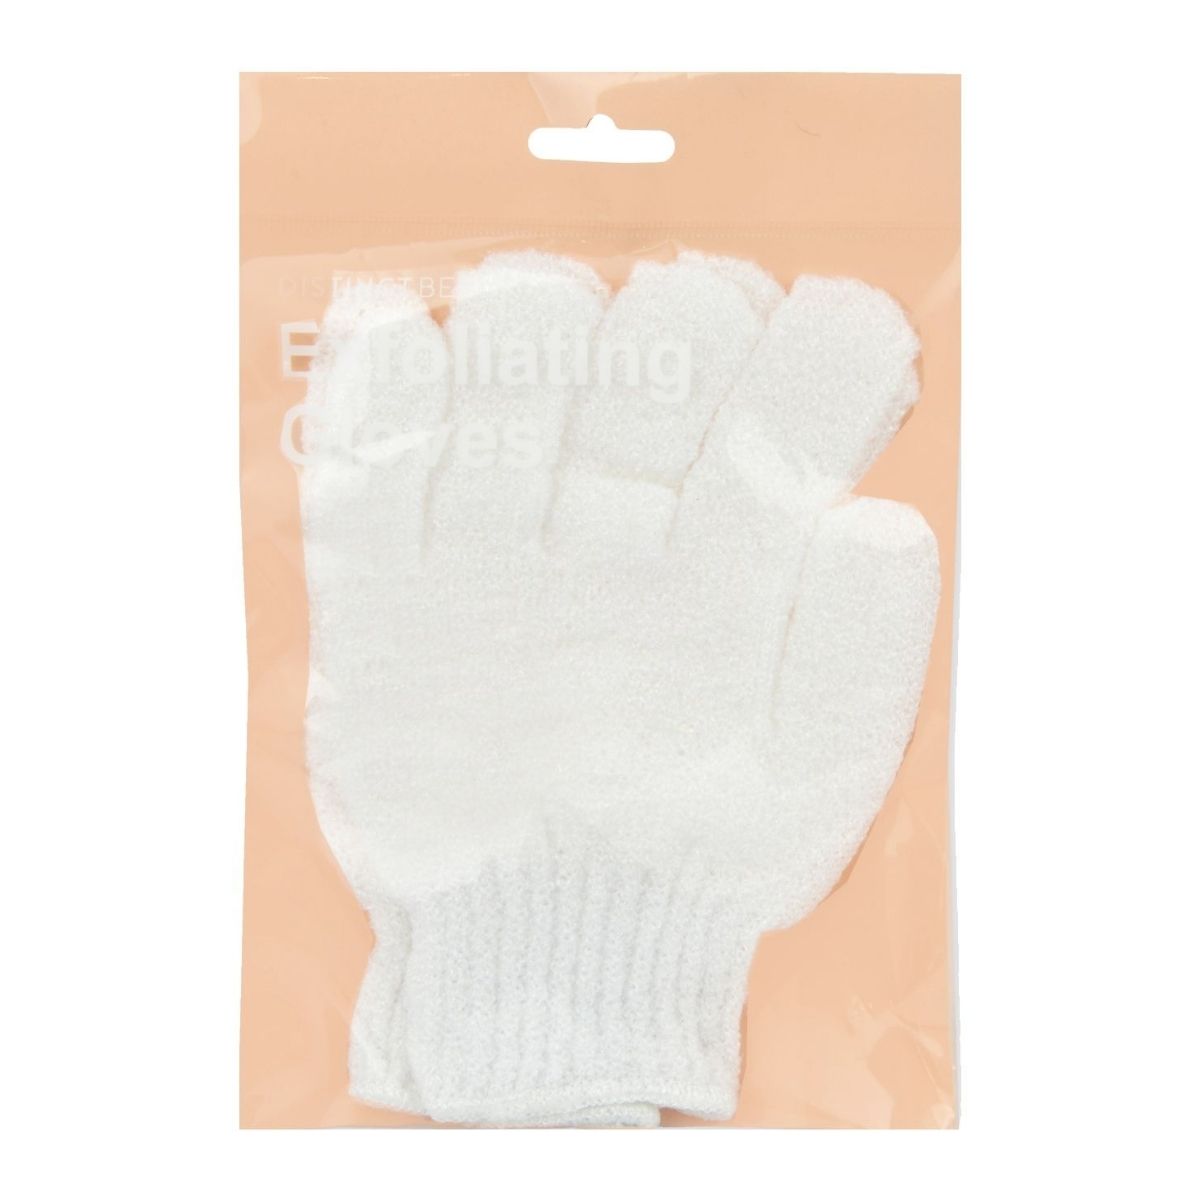 Distinct Beauty Exfoliating Gloves